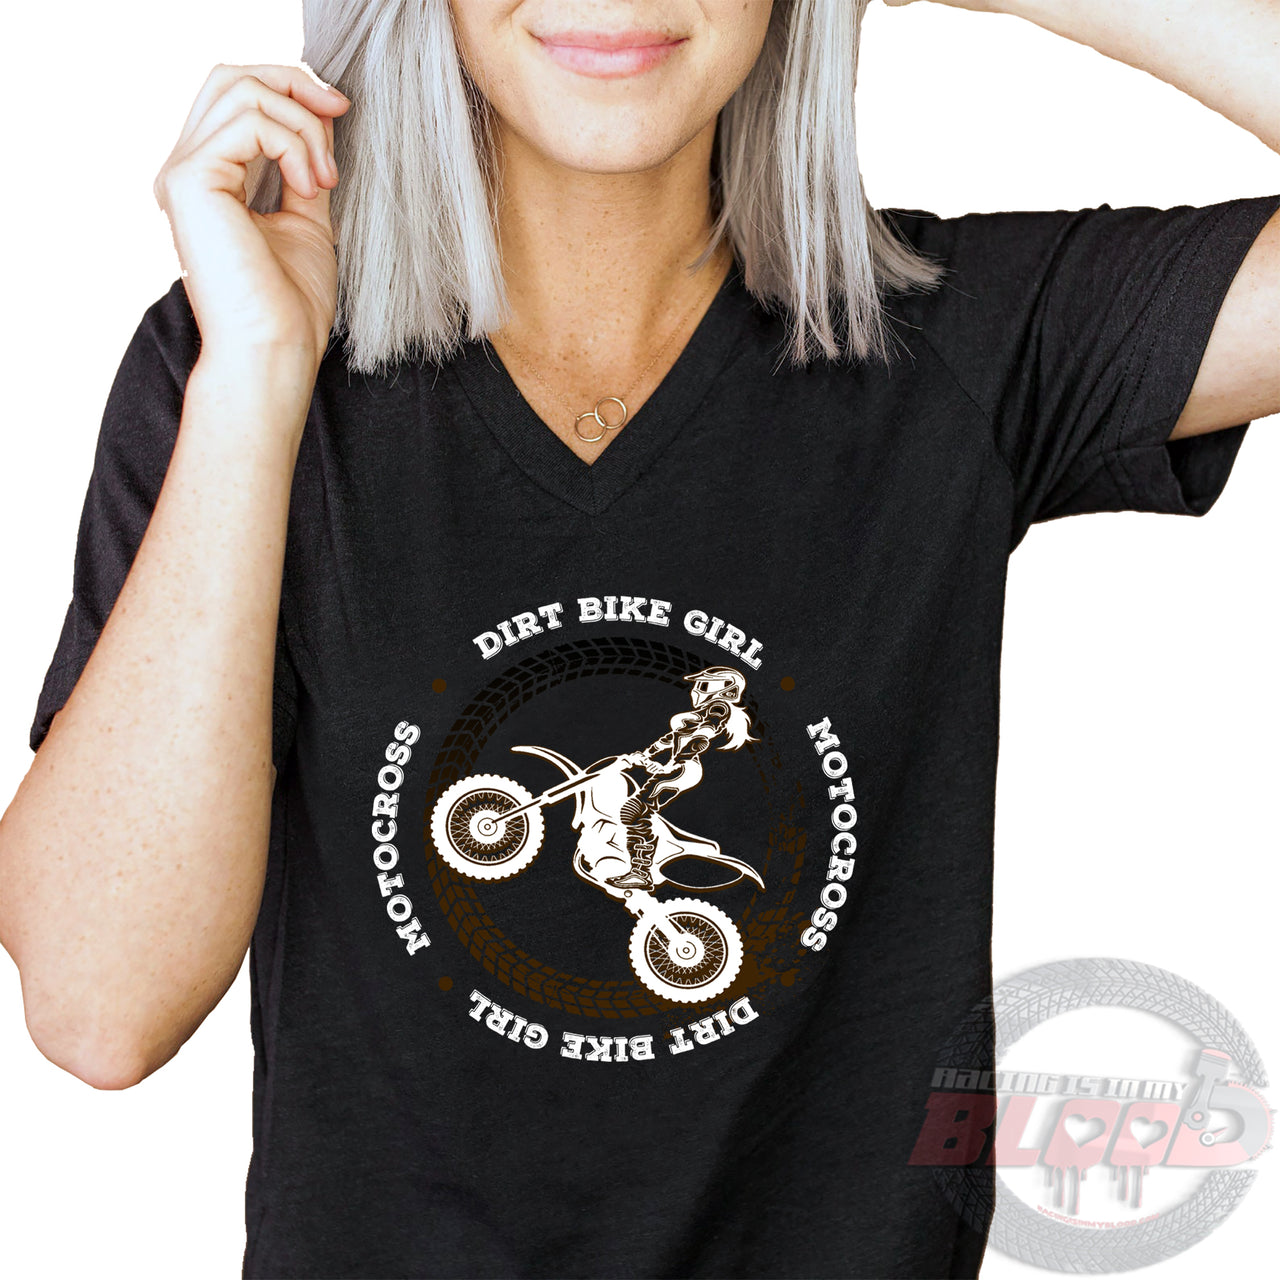 dirt bike girl t shirts